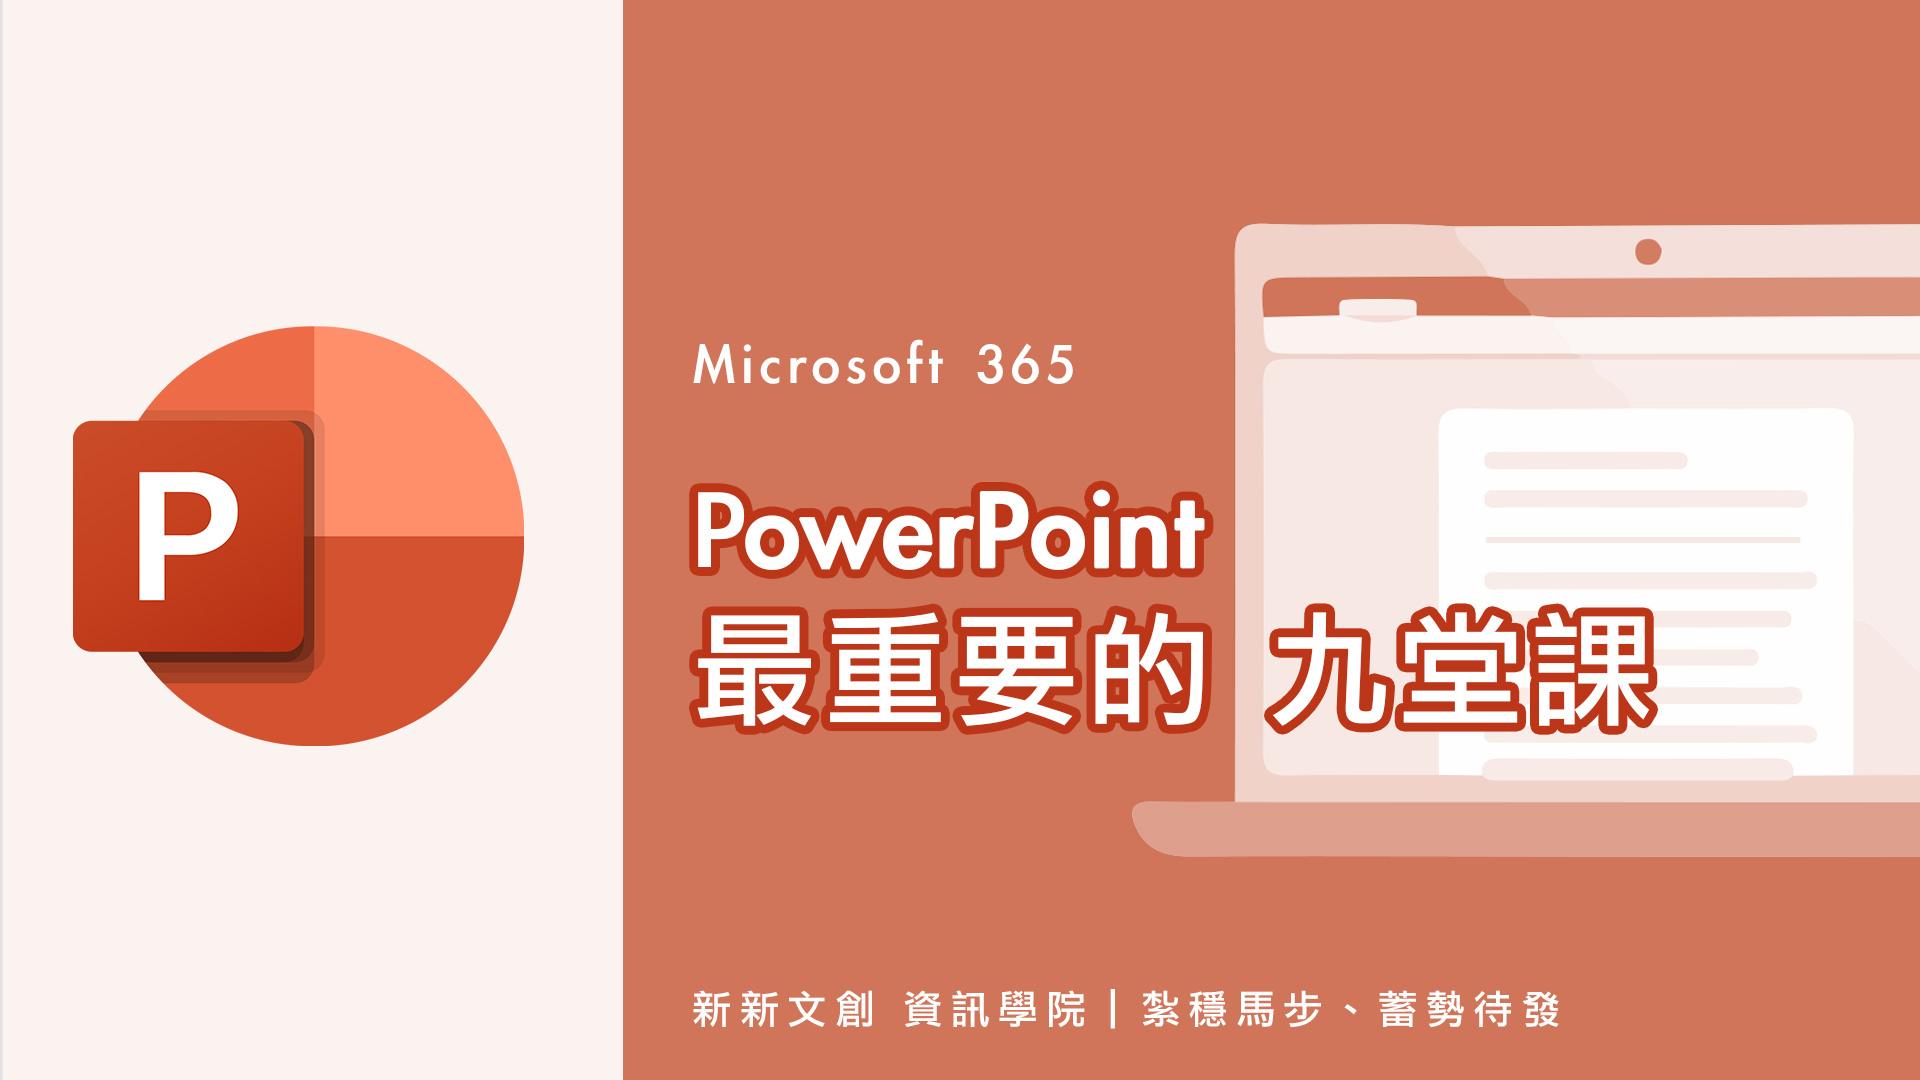 Microsoft 365 PowerPoint PPT Deck Slides Presentation Office 365